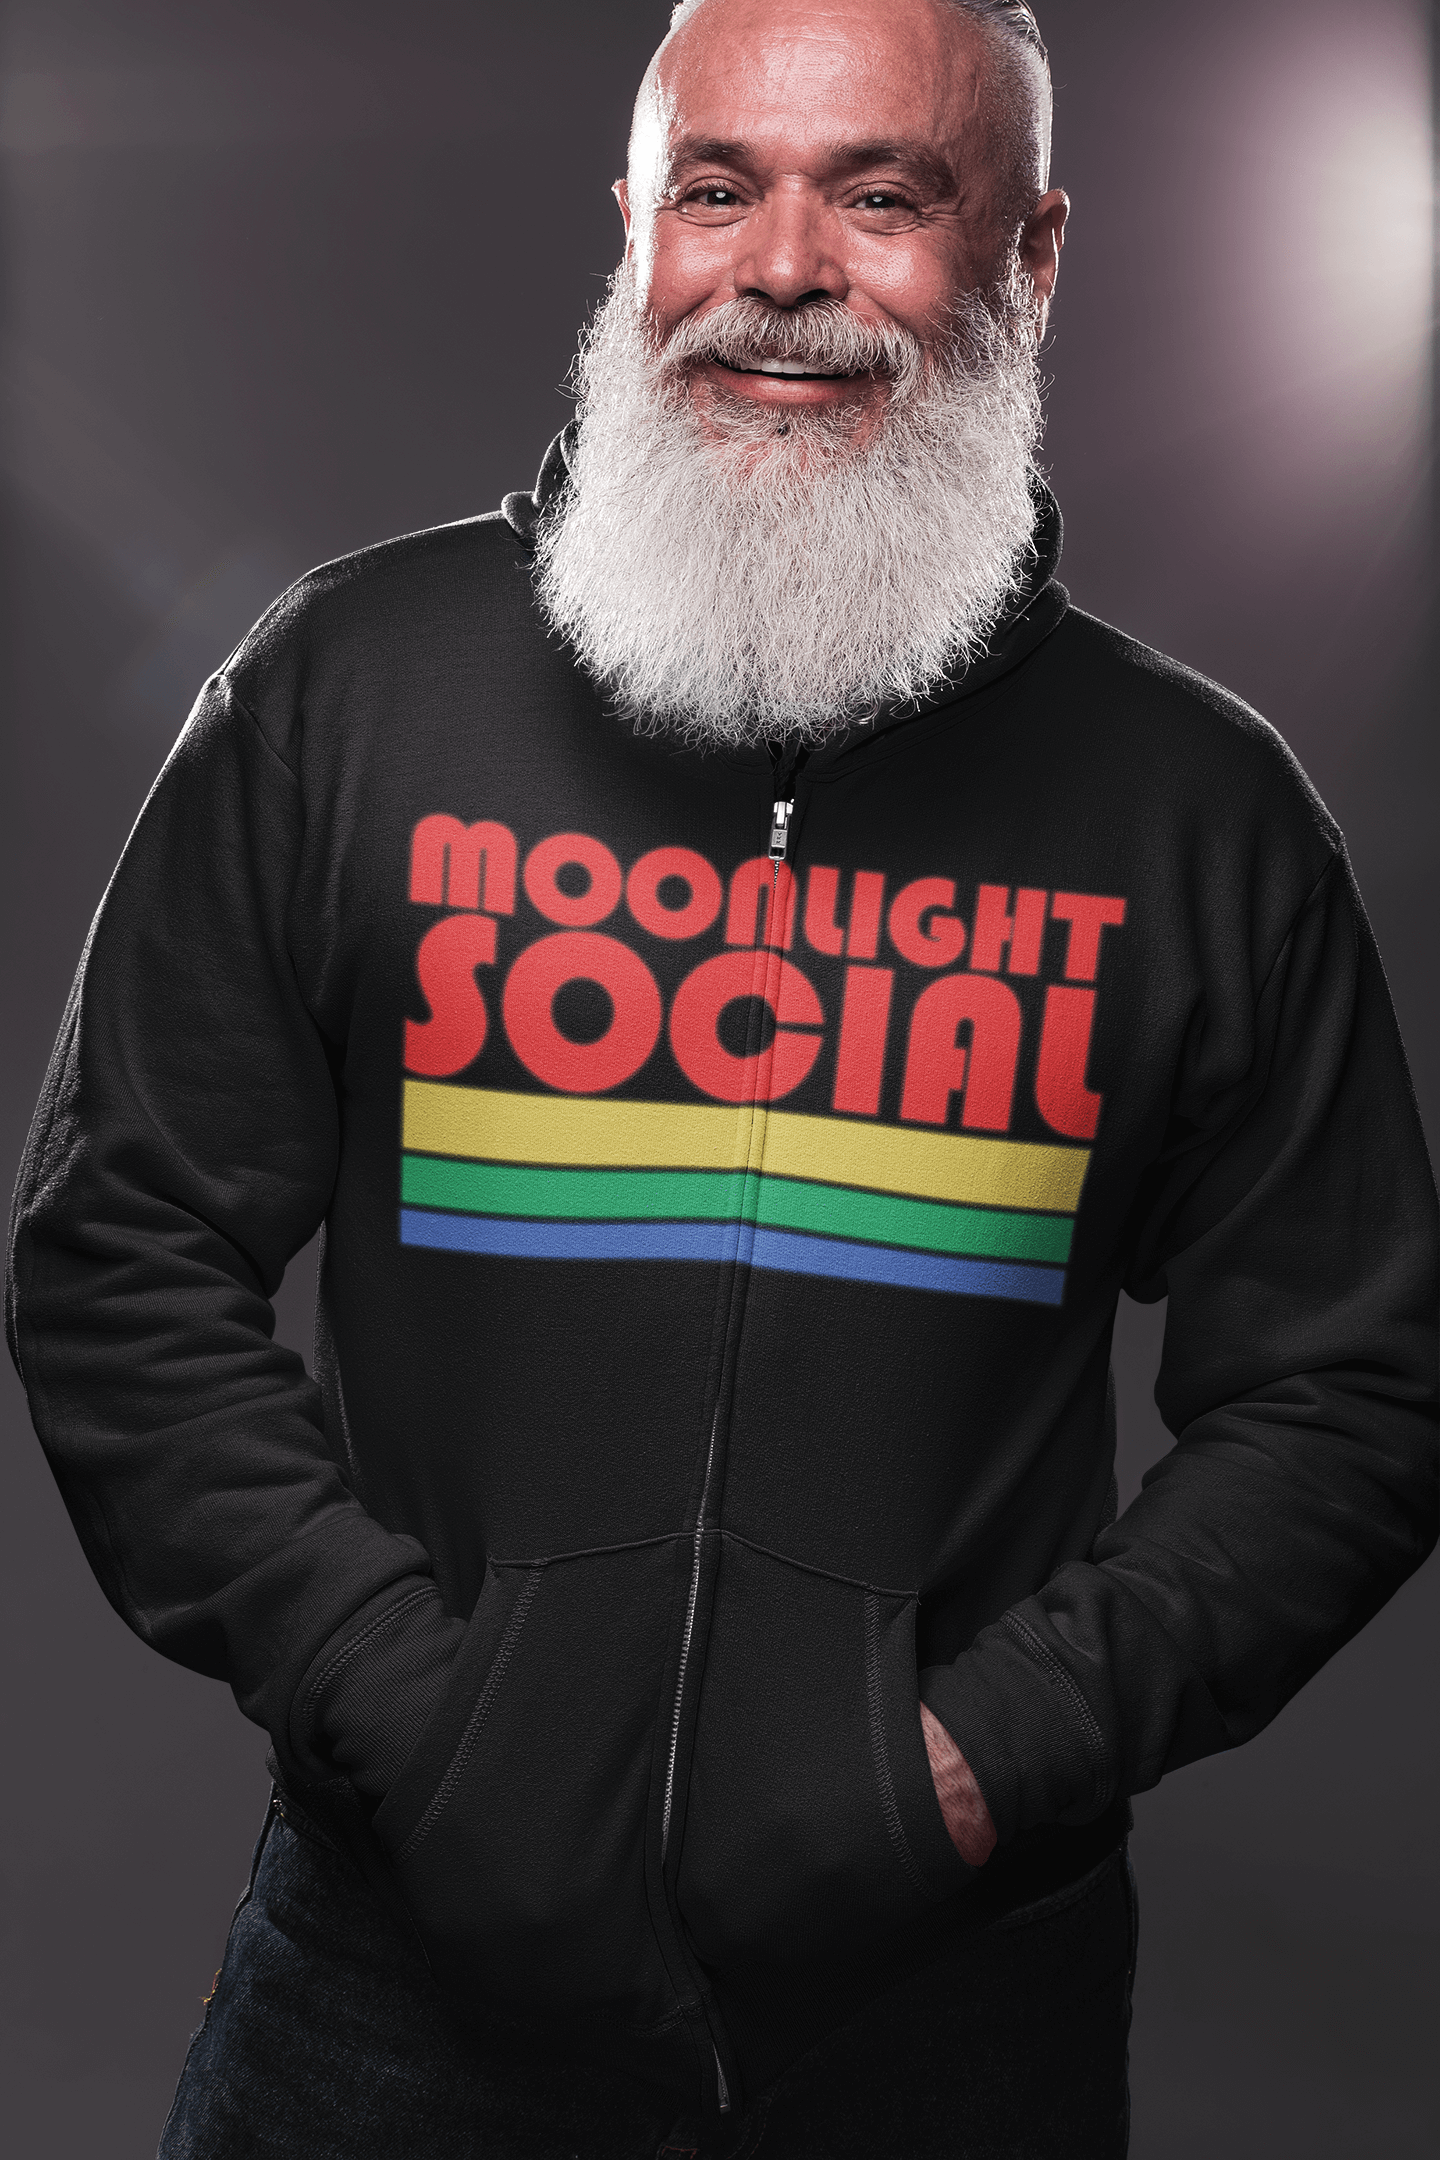 Moonlight Social Retro Zipper Hoodie